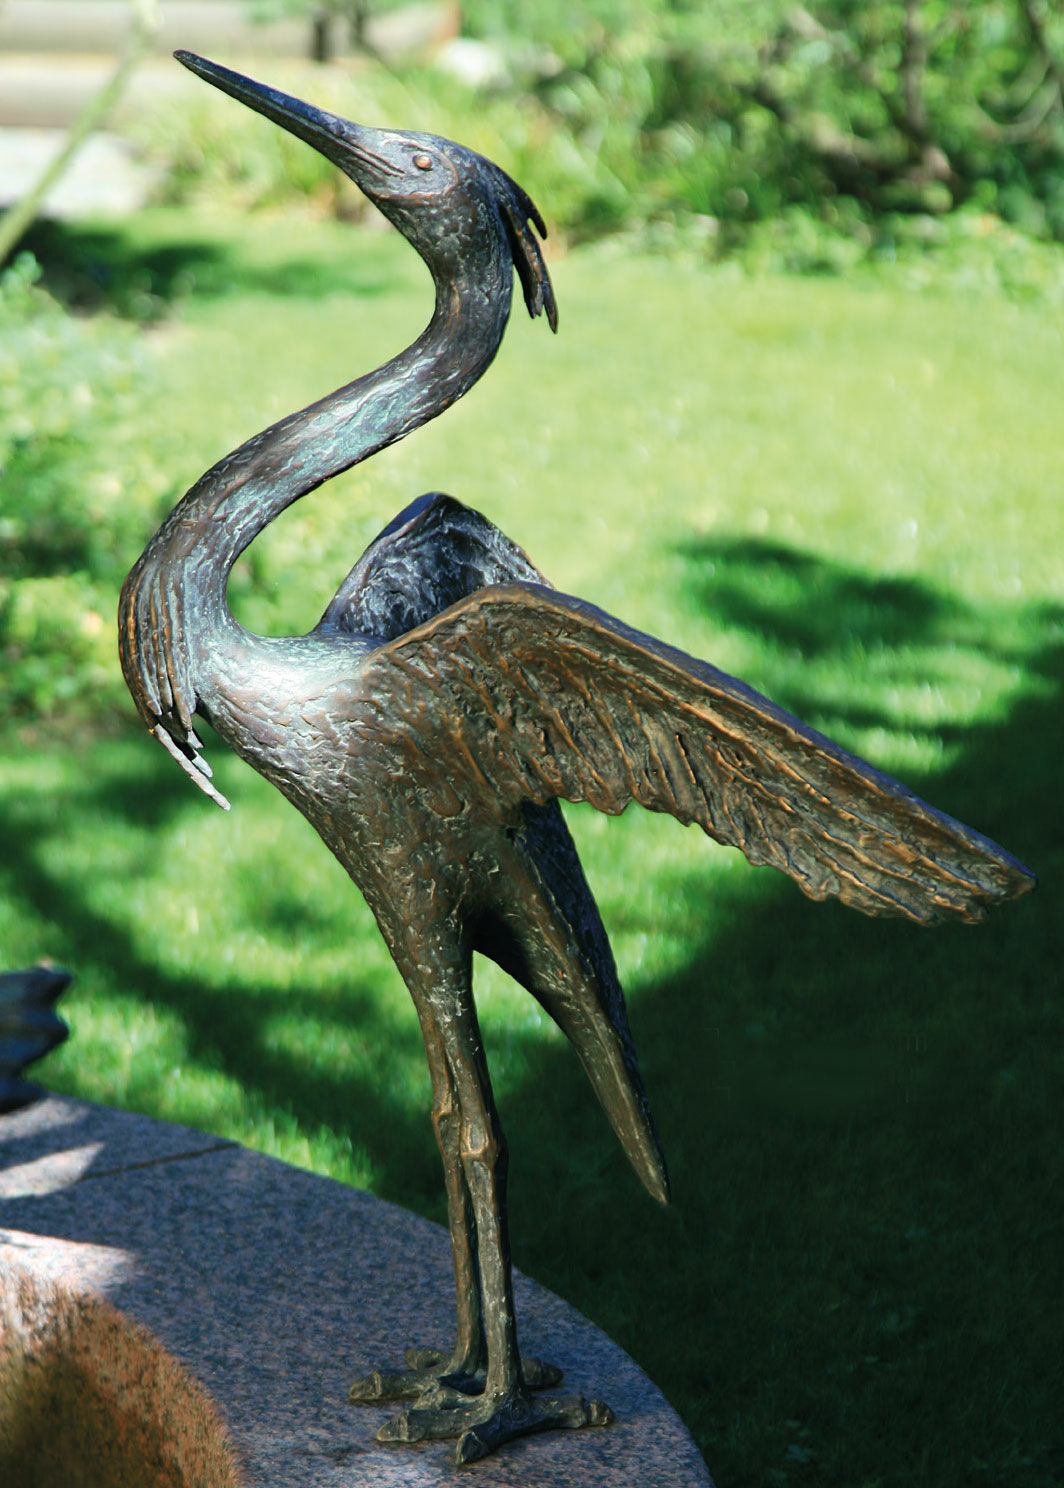 Garden sculpture "Heron Approaching", bronze by Ernst Günzkofer